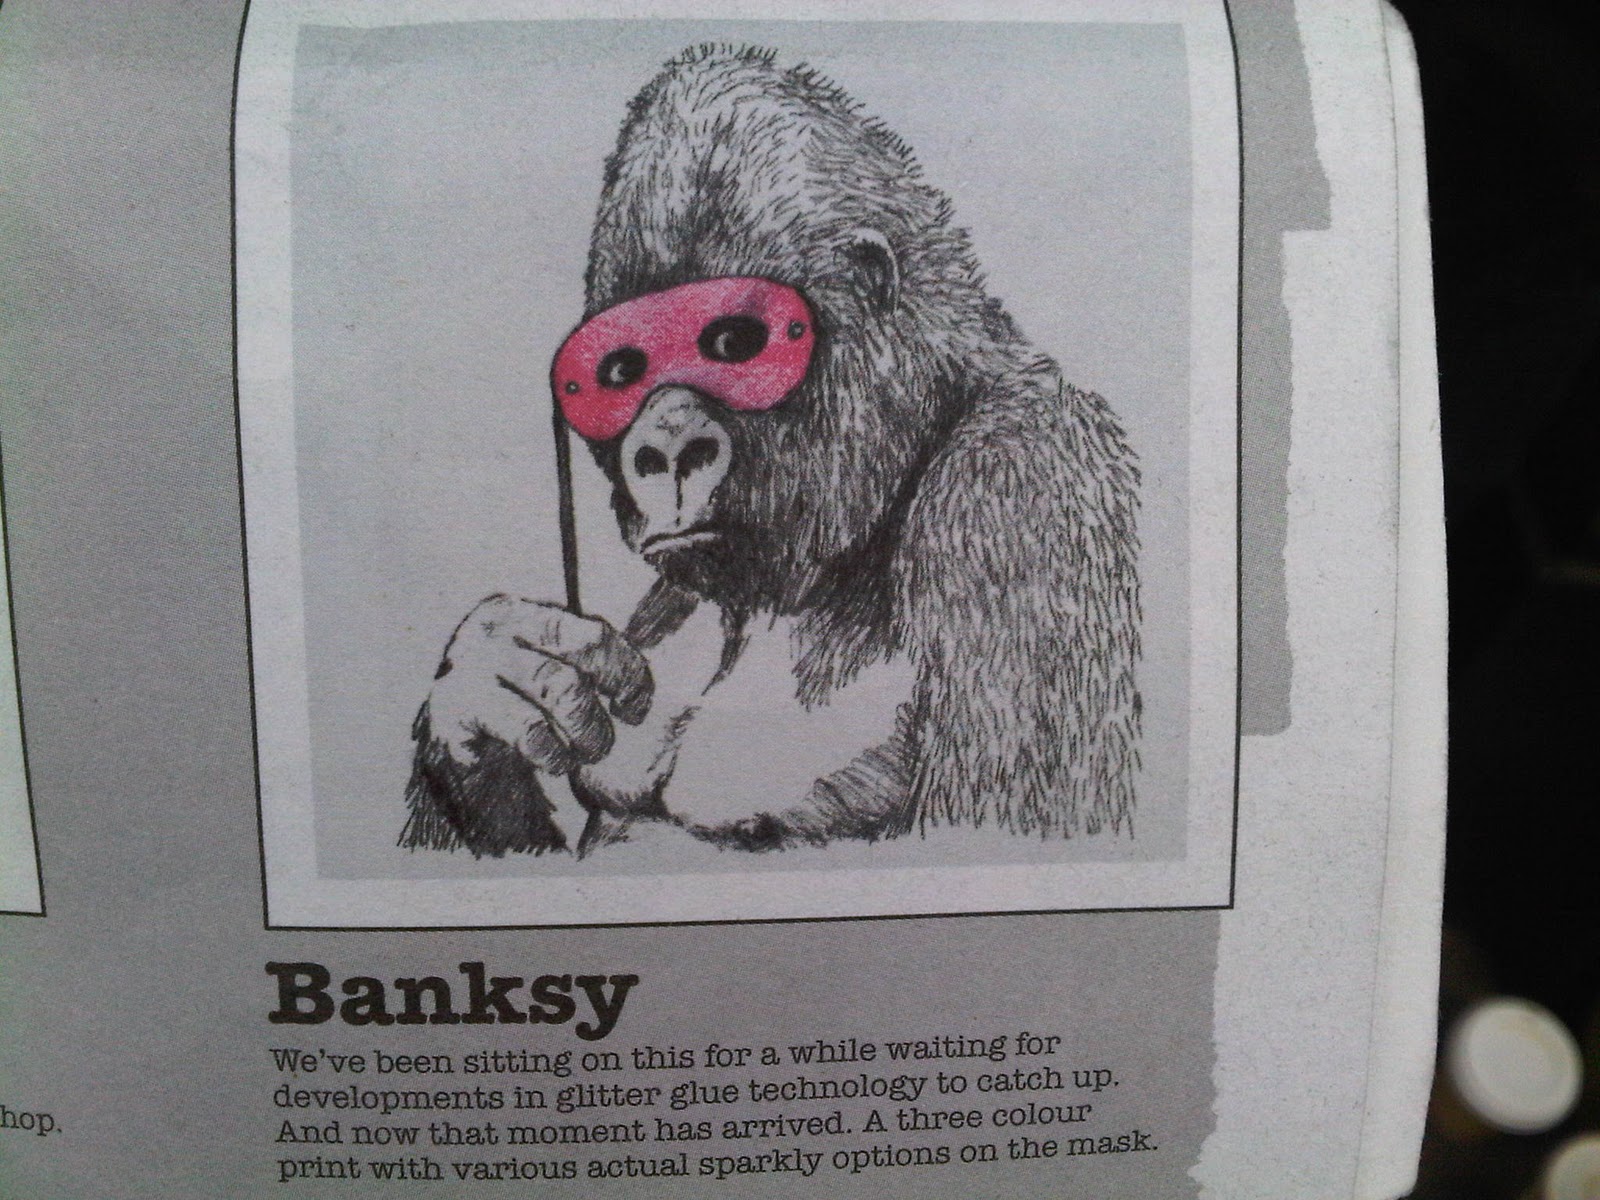 http://banksynews.com/wp-content/uploads/2013/09/banksy_gorilla.jpg